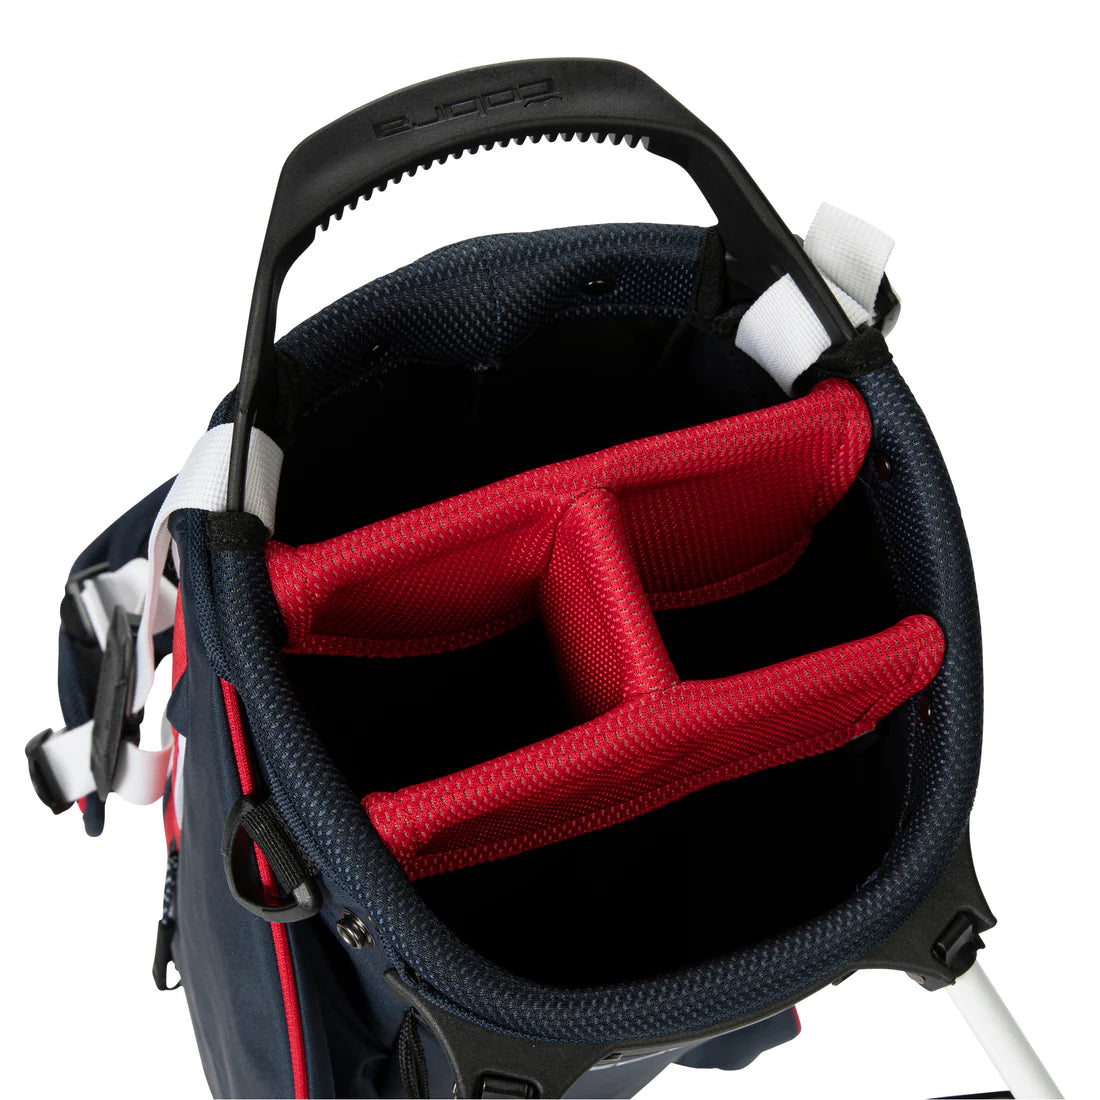 Cobra Ultralight pro stand bag